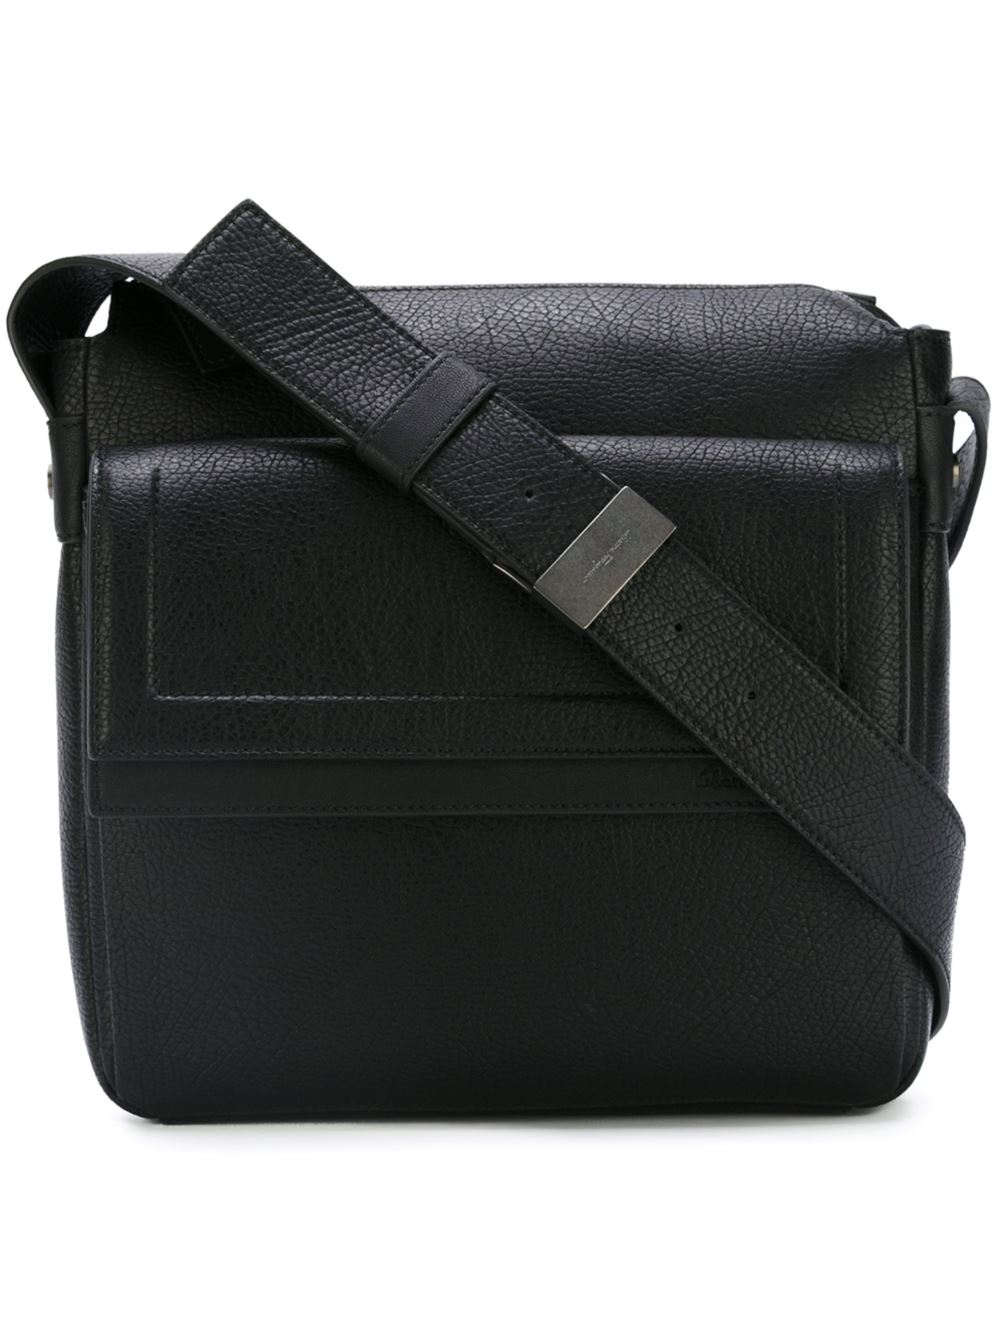 Ferragamo Leather Flap Messenger Bag in Black for Men - Lyst